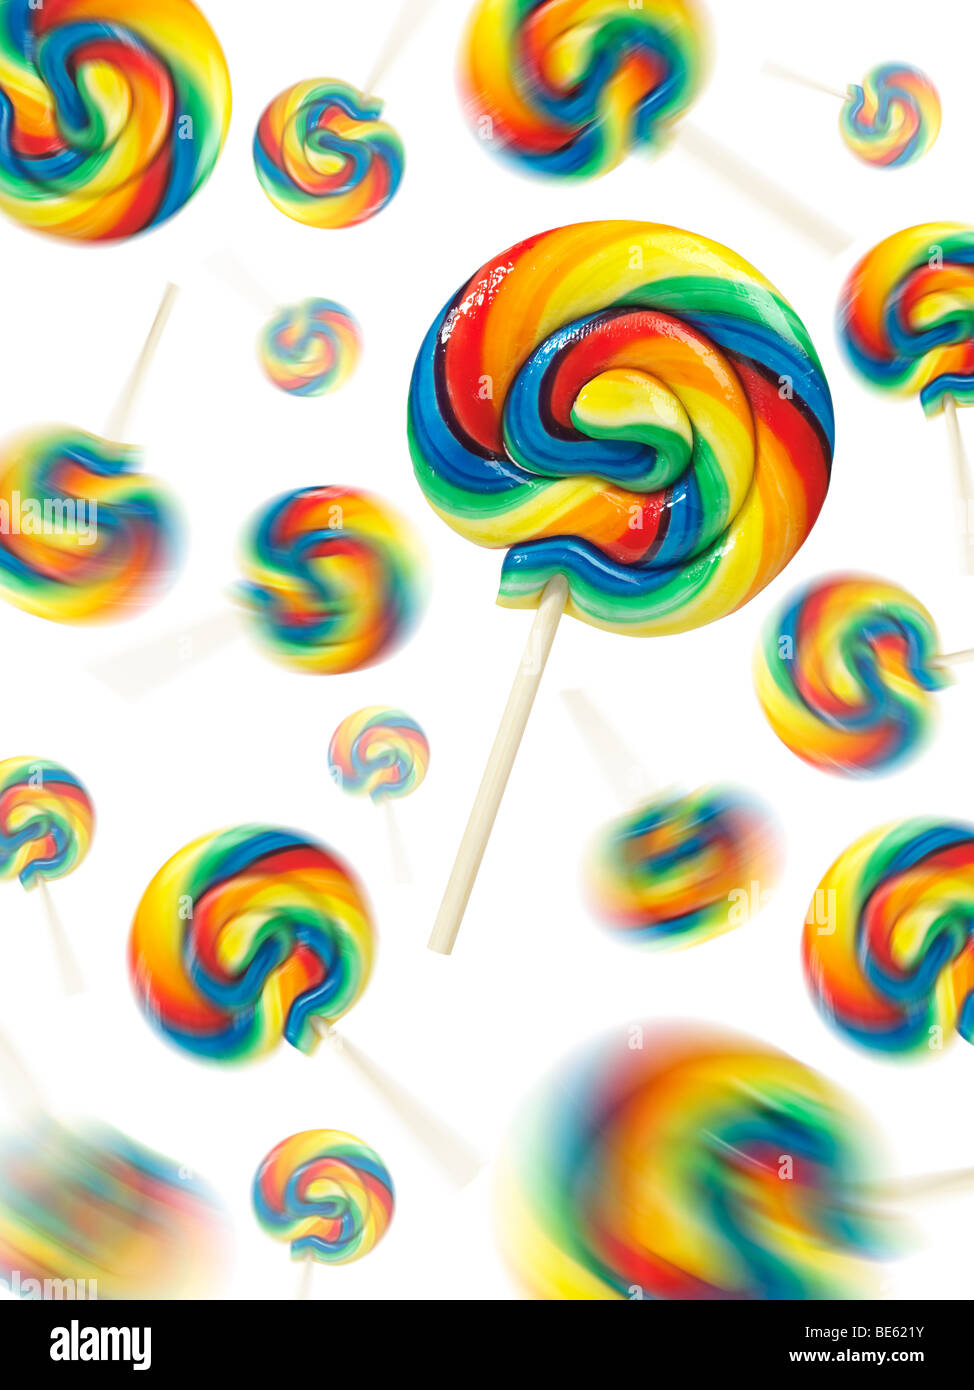 Colorful appetizing lollipops Stock Photo